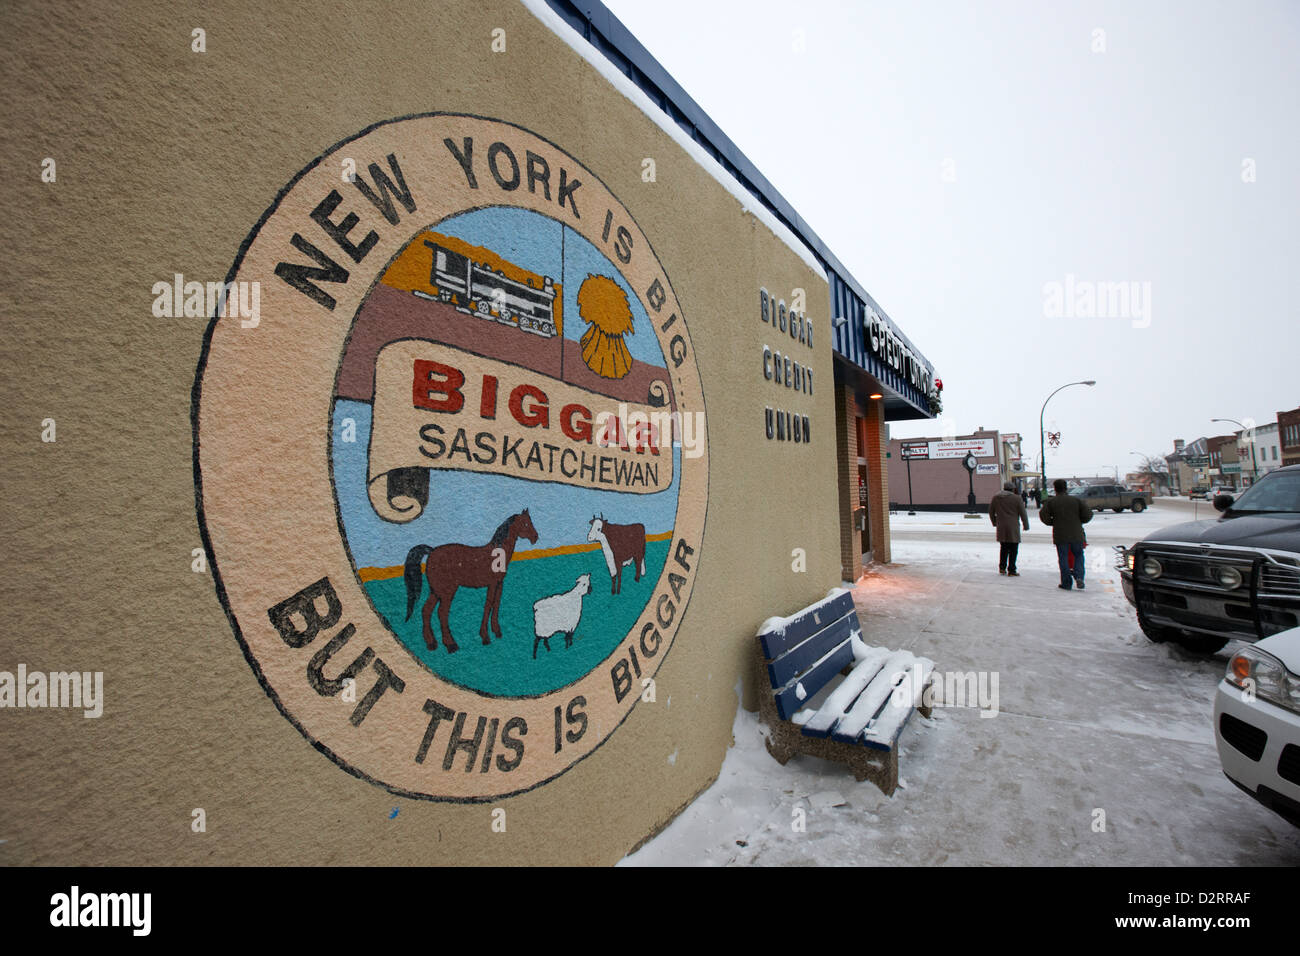 New York est grand, mais ce n'est signer slogan biggar Biggar, rue main Saskatchewan Canada Banque D'Images